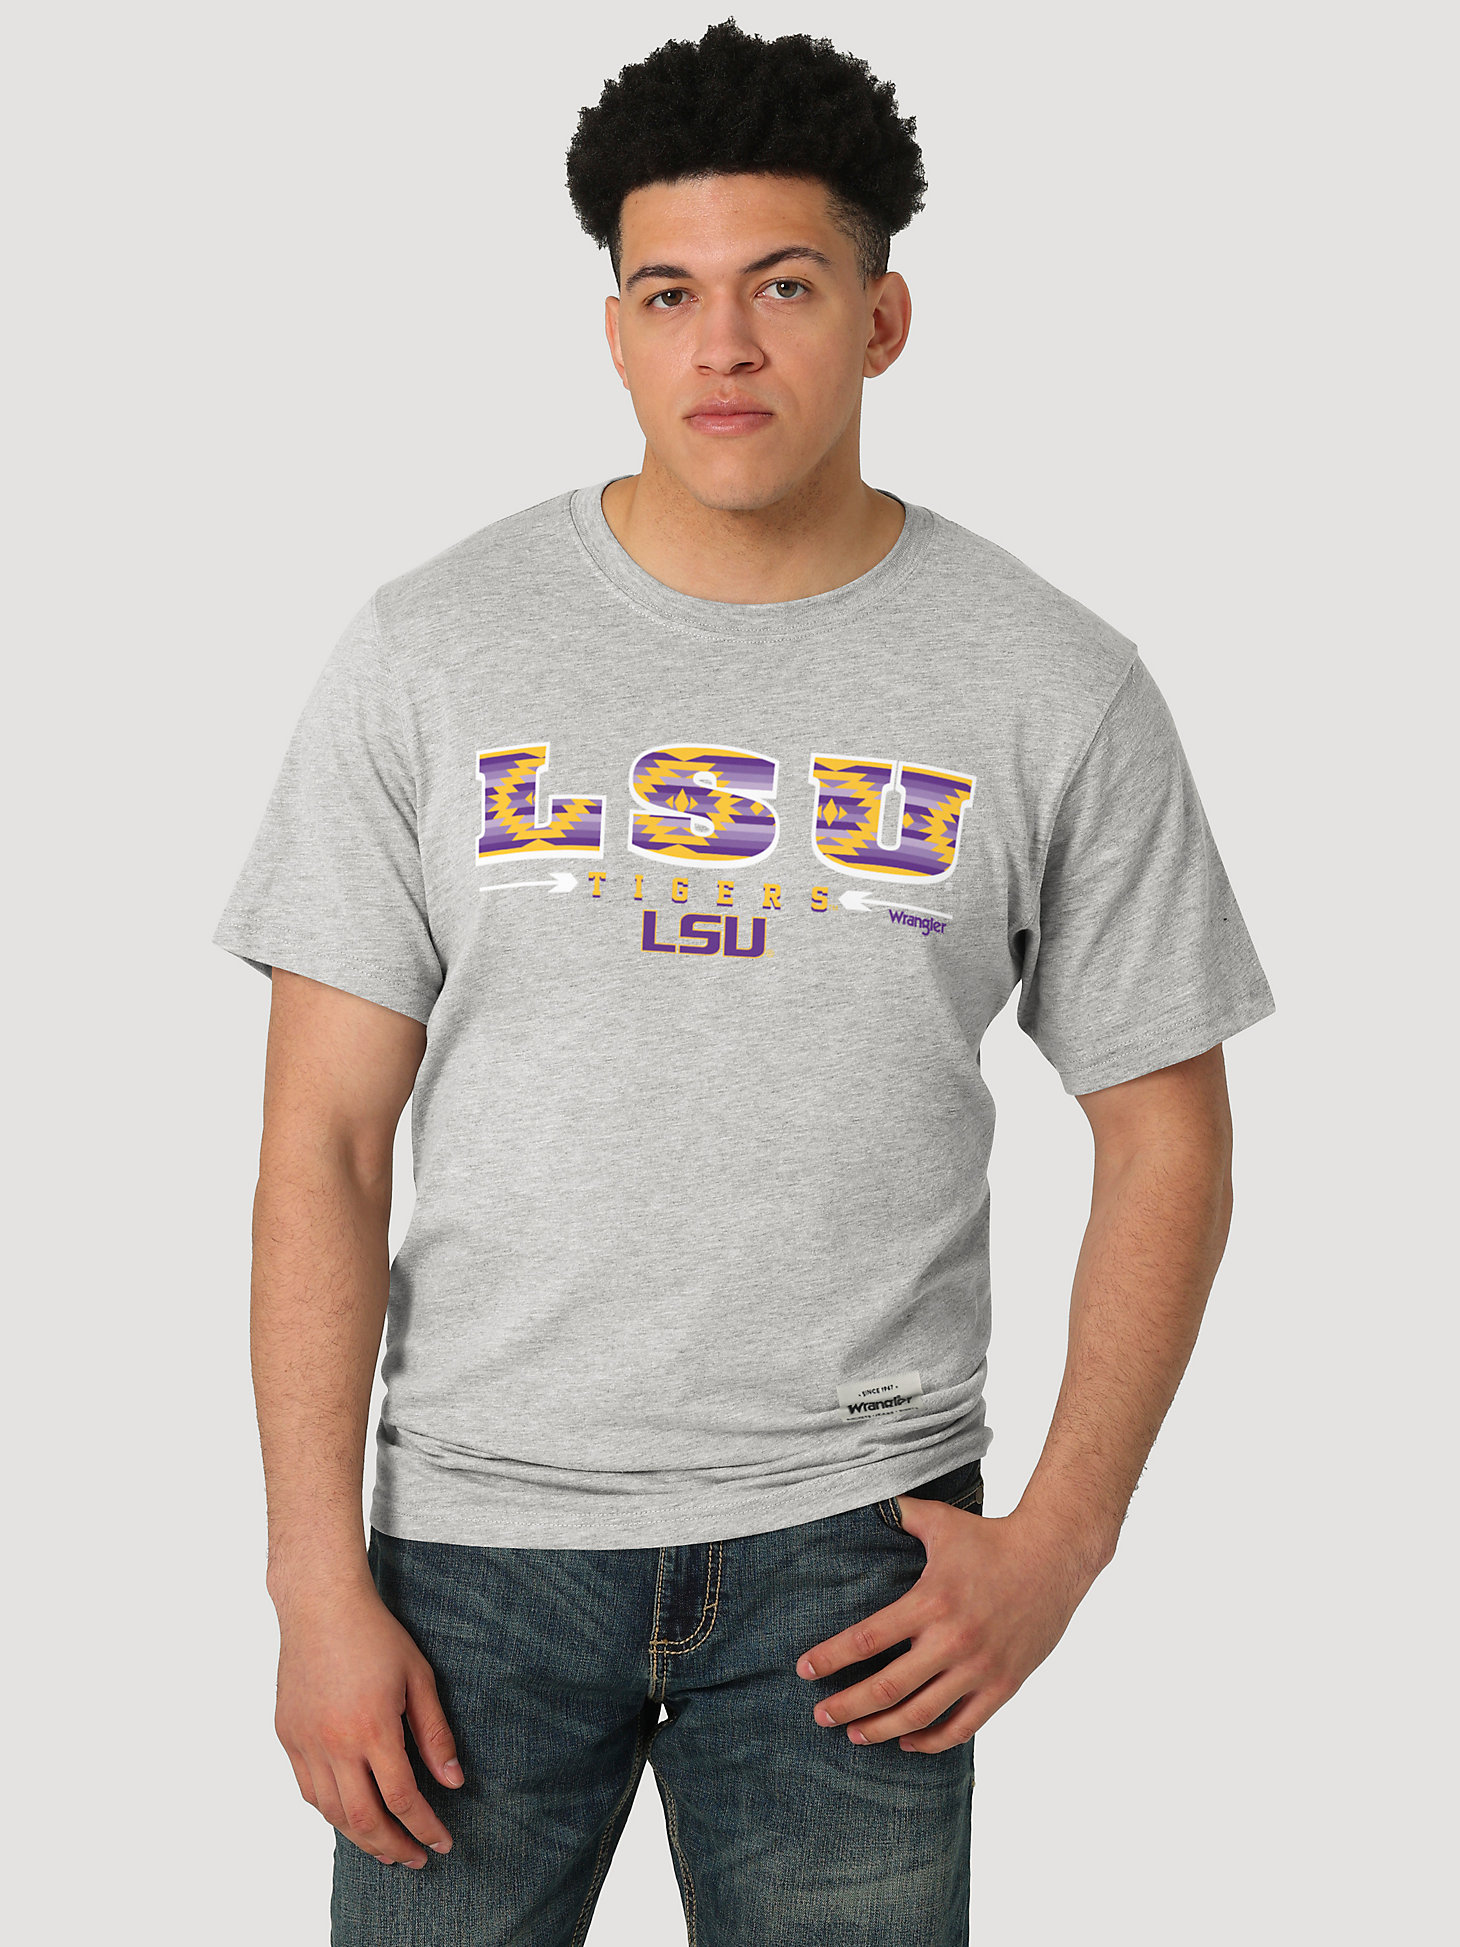 Wrangler Collegiate Sunset Printed Short Sleeve T-Shirt in Louisiana State University main view